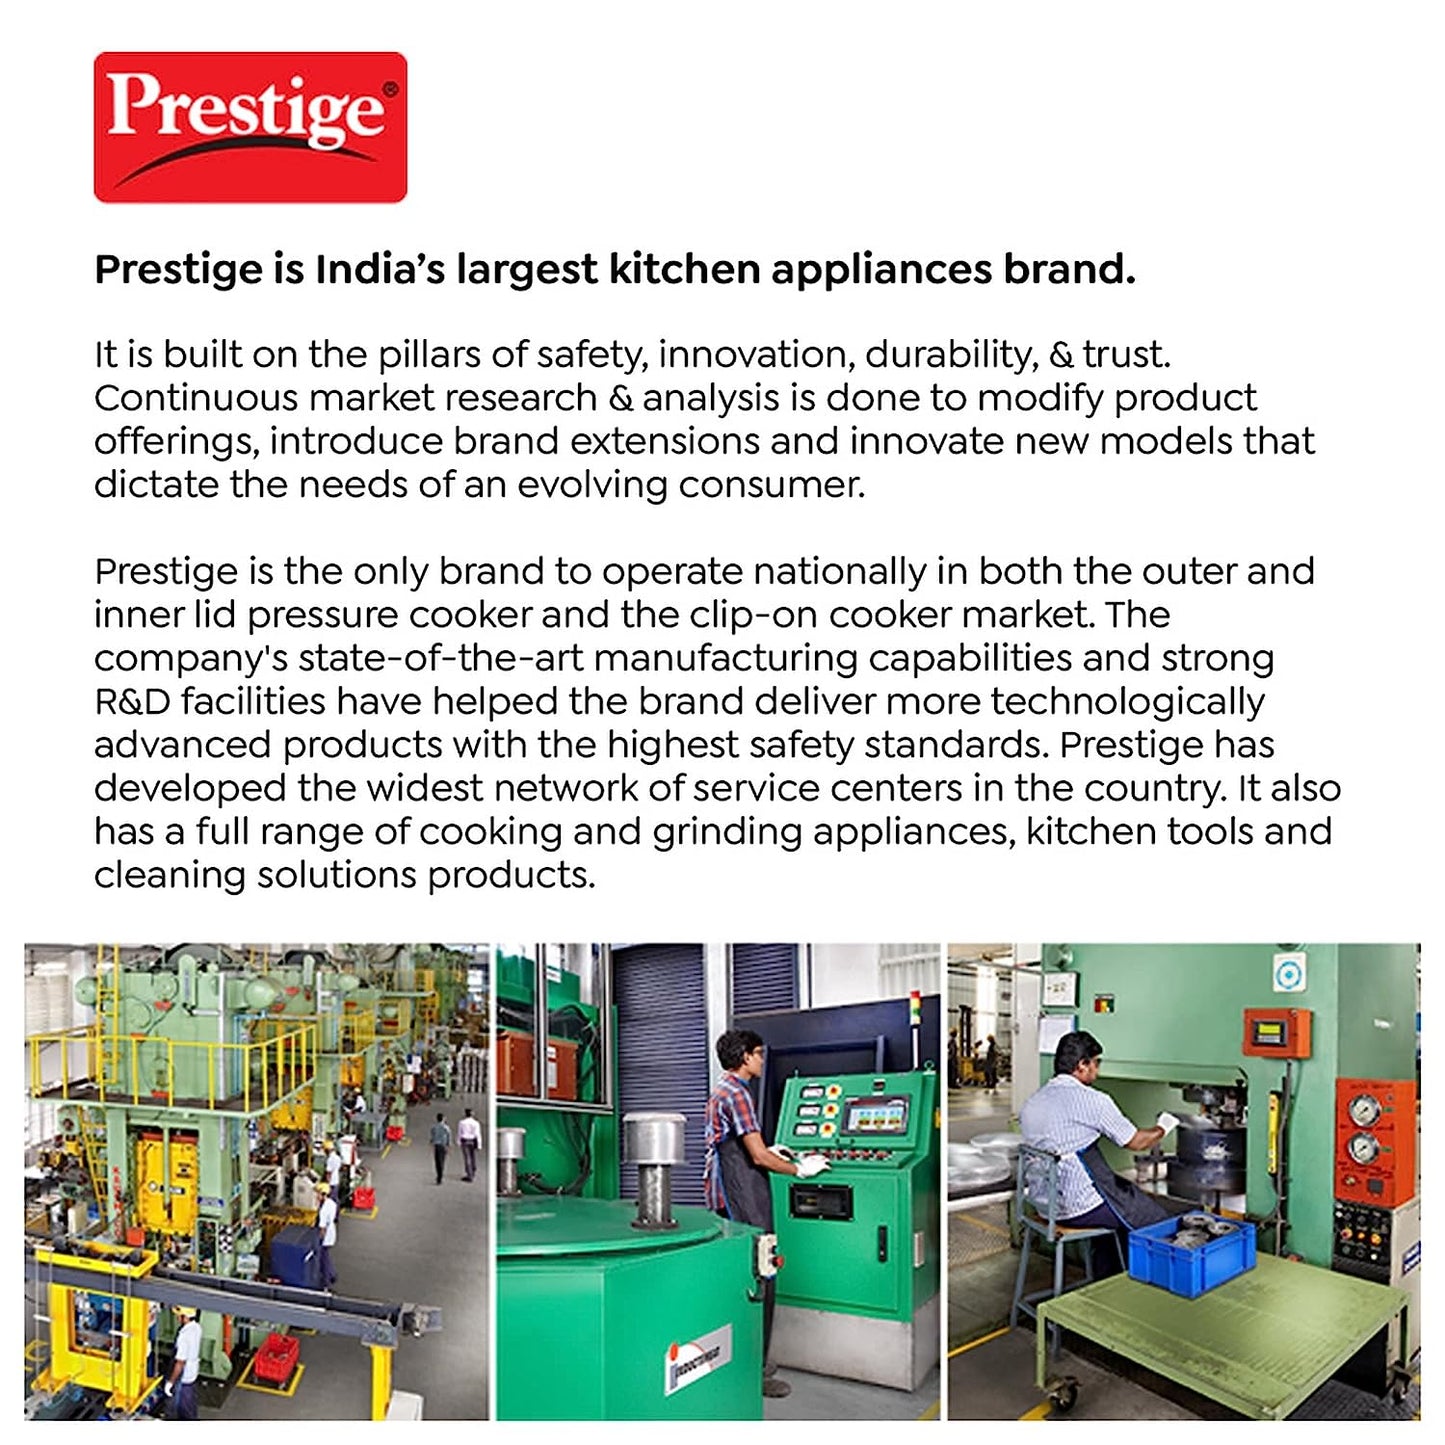 Prestige Popular Svachh Stainless Steel Induction Base Outer Lid Pressure Cooker, 2 Litres